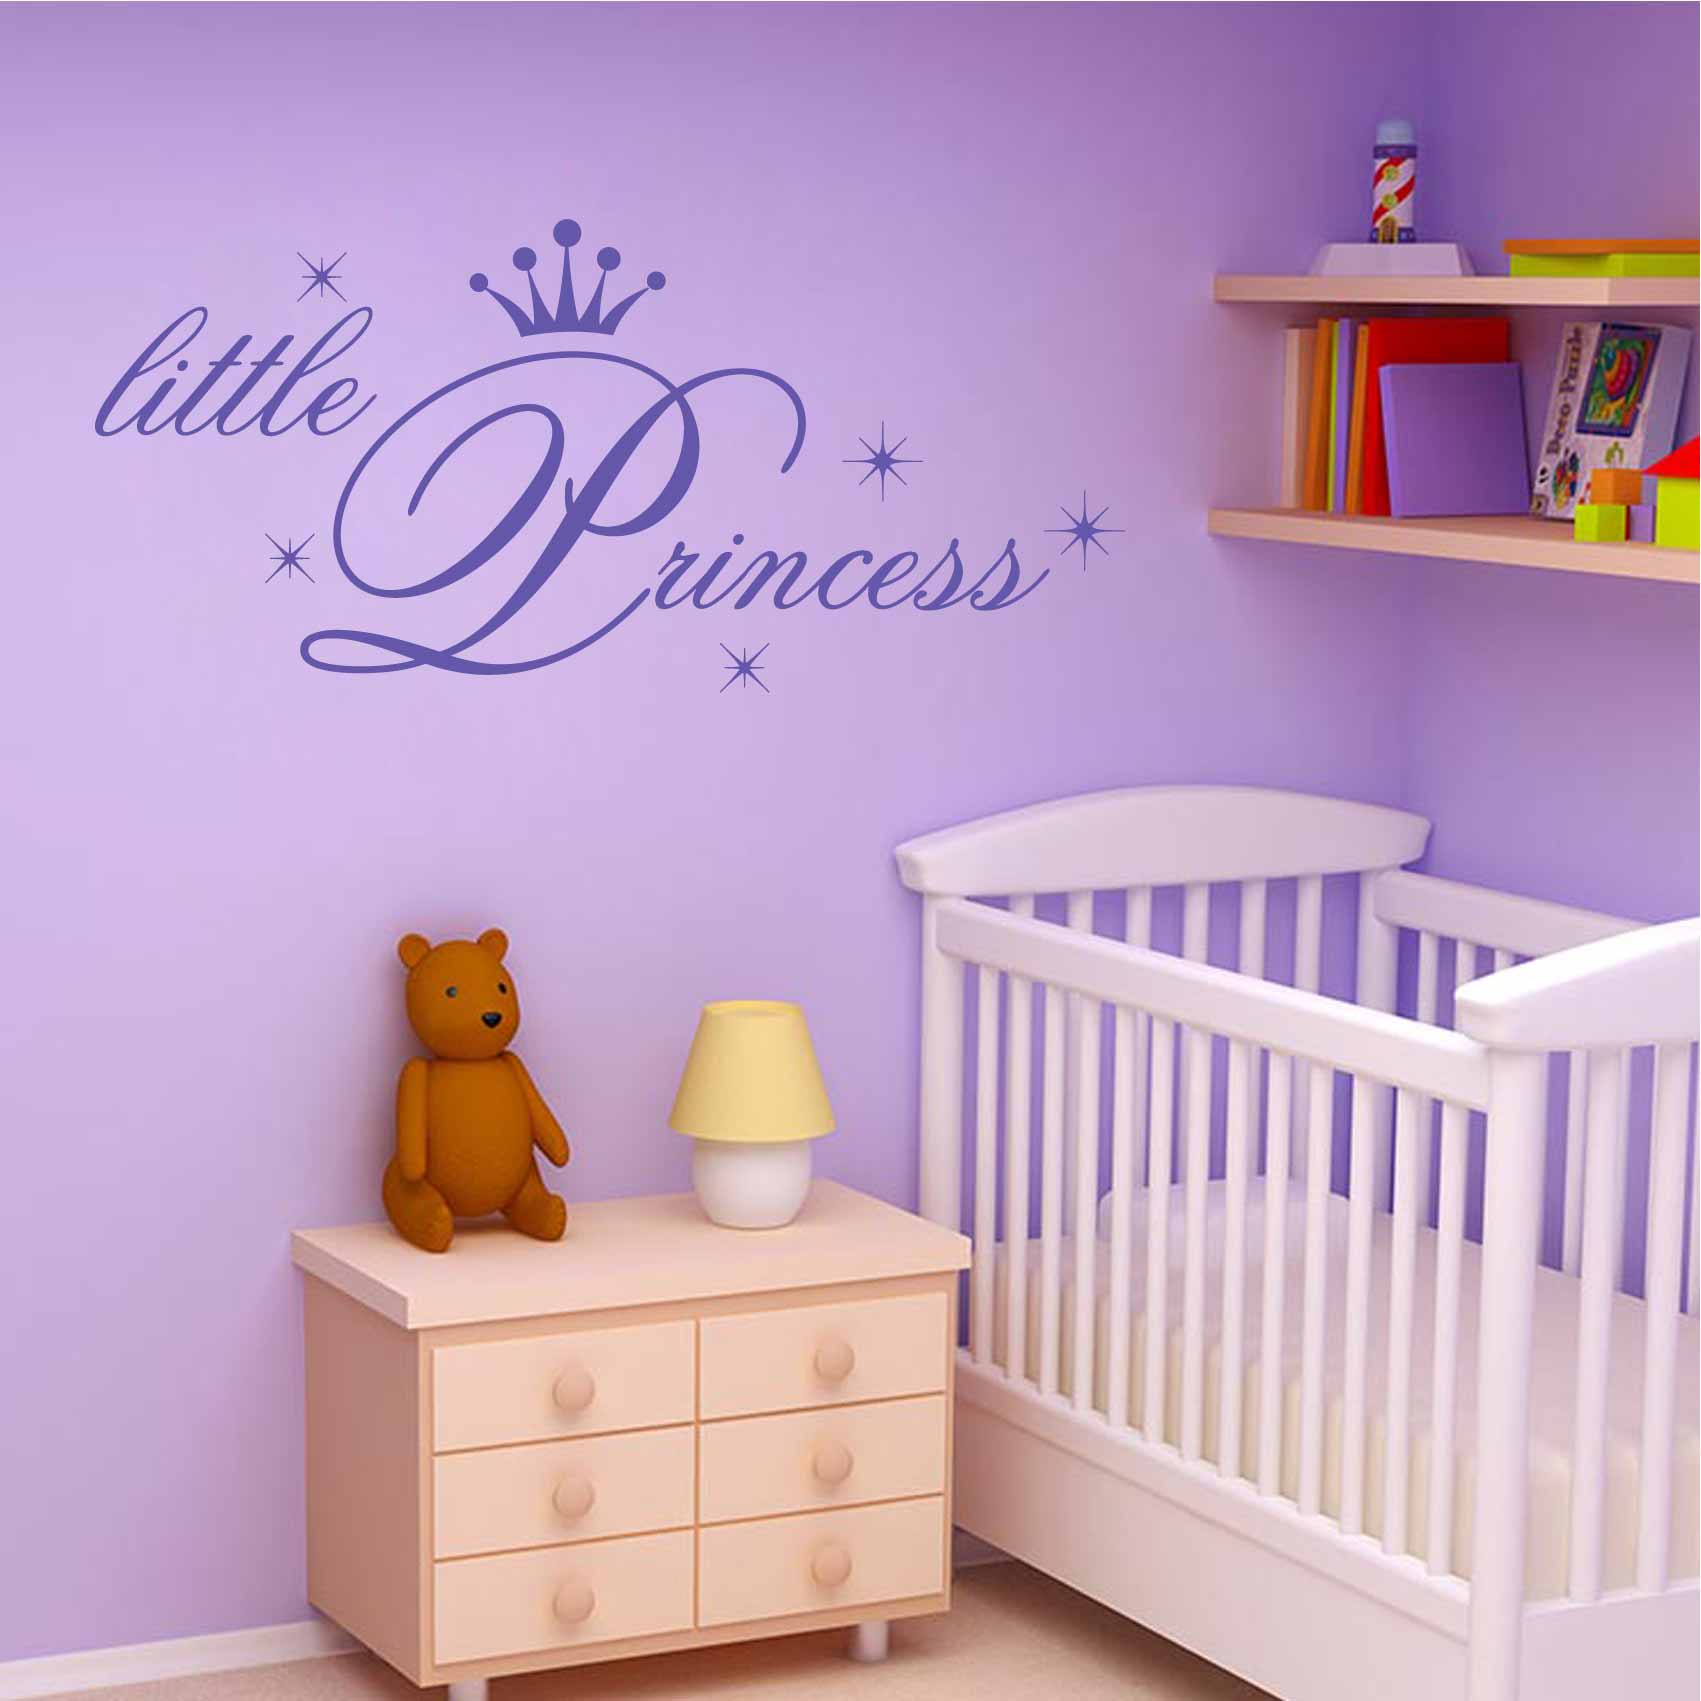 stickers-little-princess-ref24princesse-autocollant-muraux-princesses-sticker-mural-princesse-chambre-fille-bébé-deco-salon